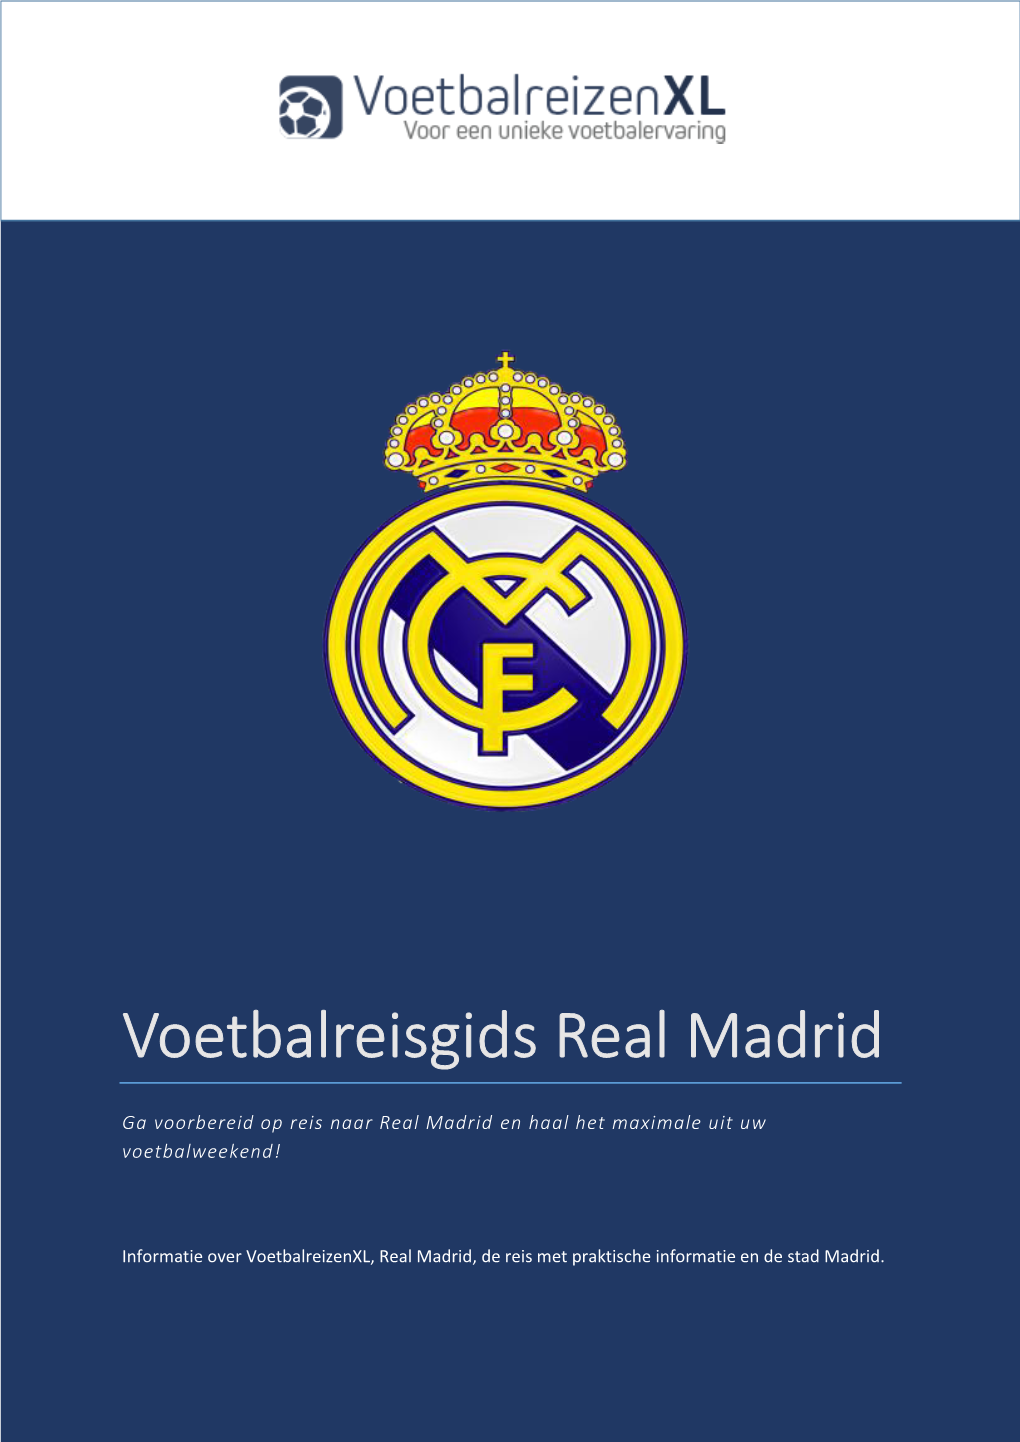 Voetbalreisgids Real Madrid